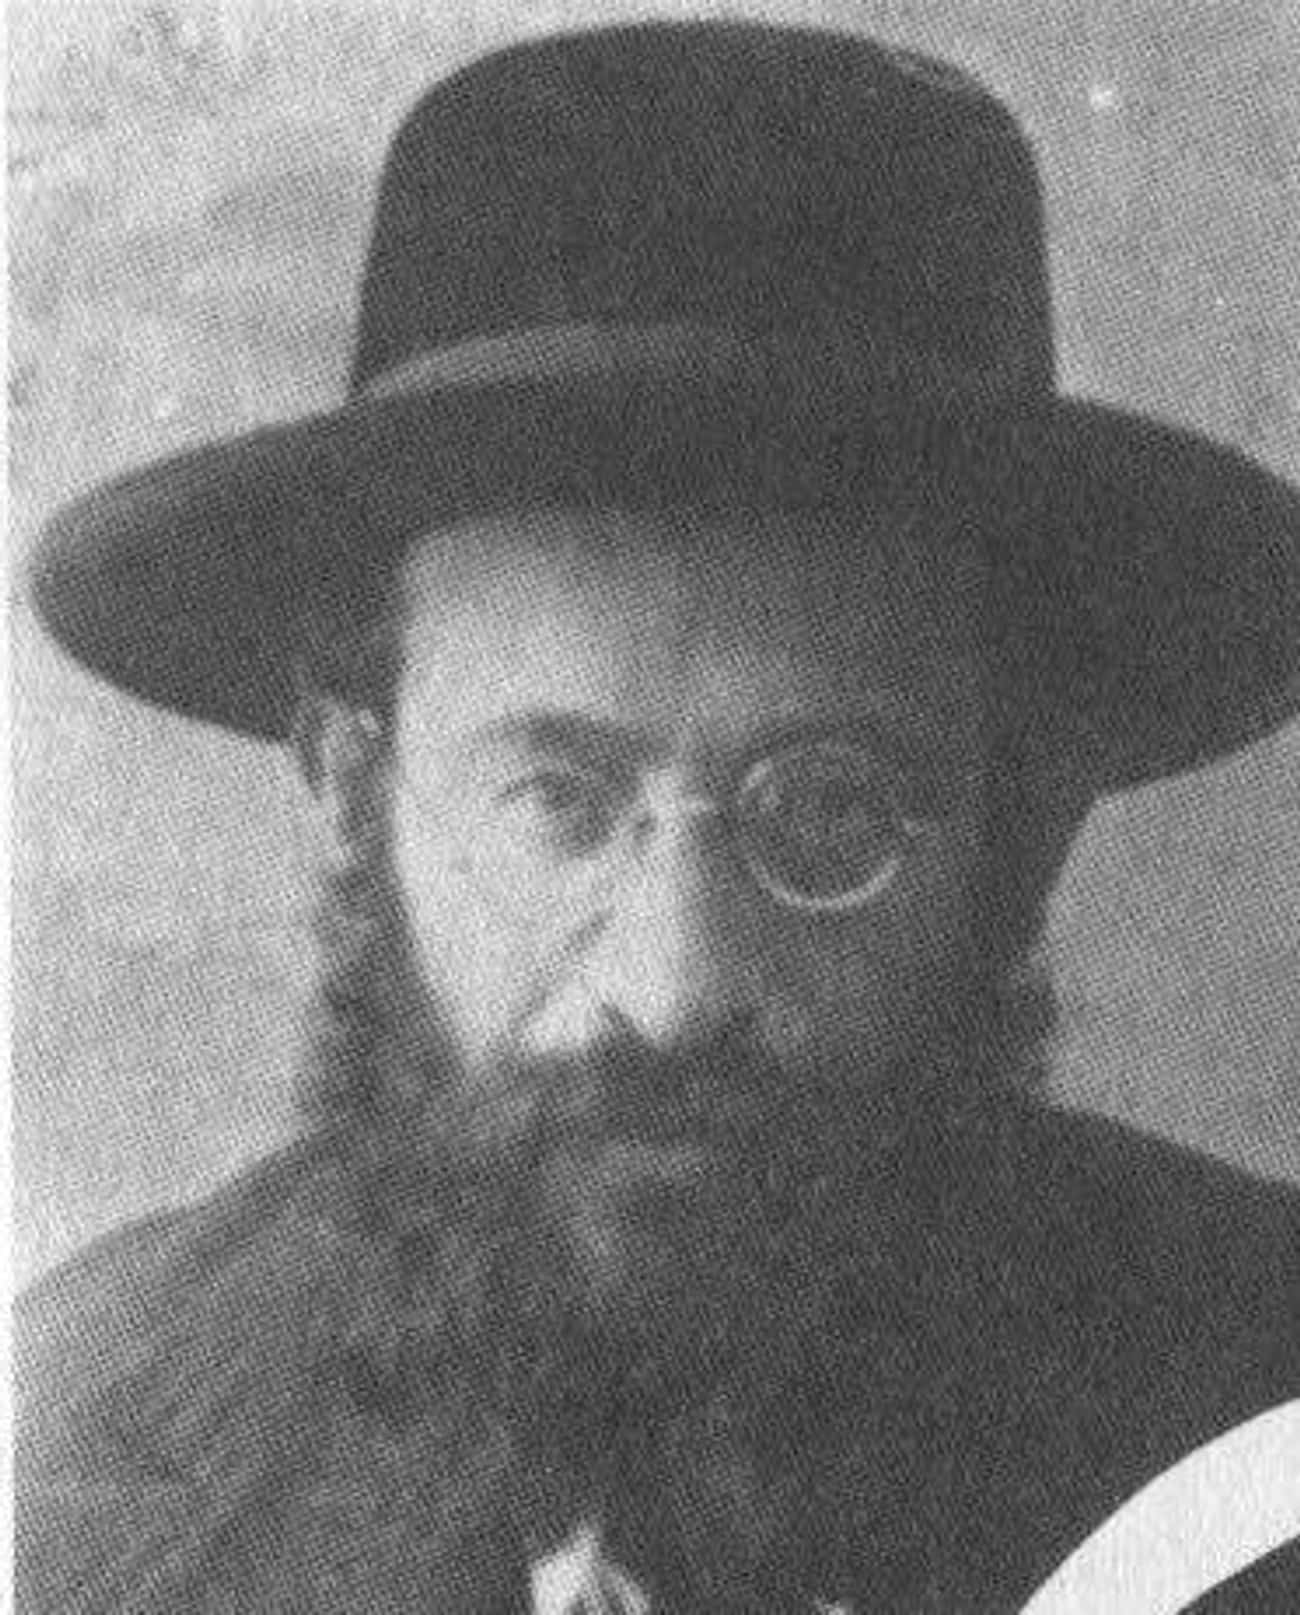 Chaim Michael Dov Weissmandl